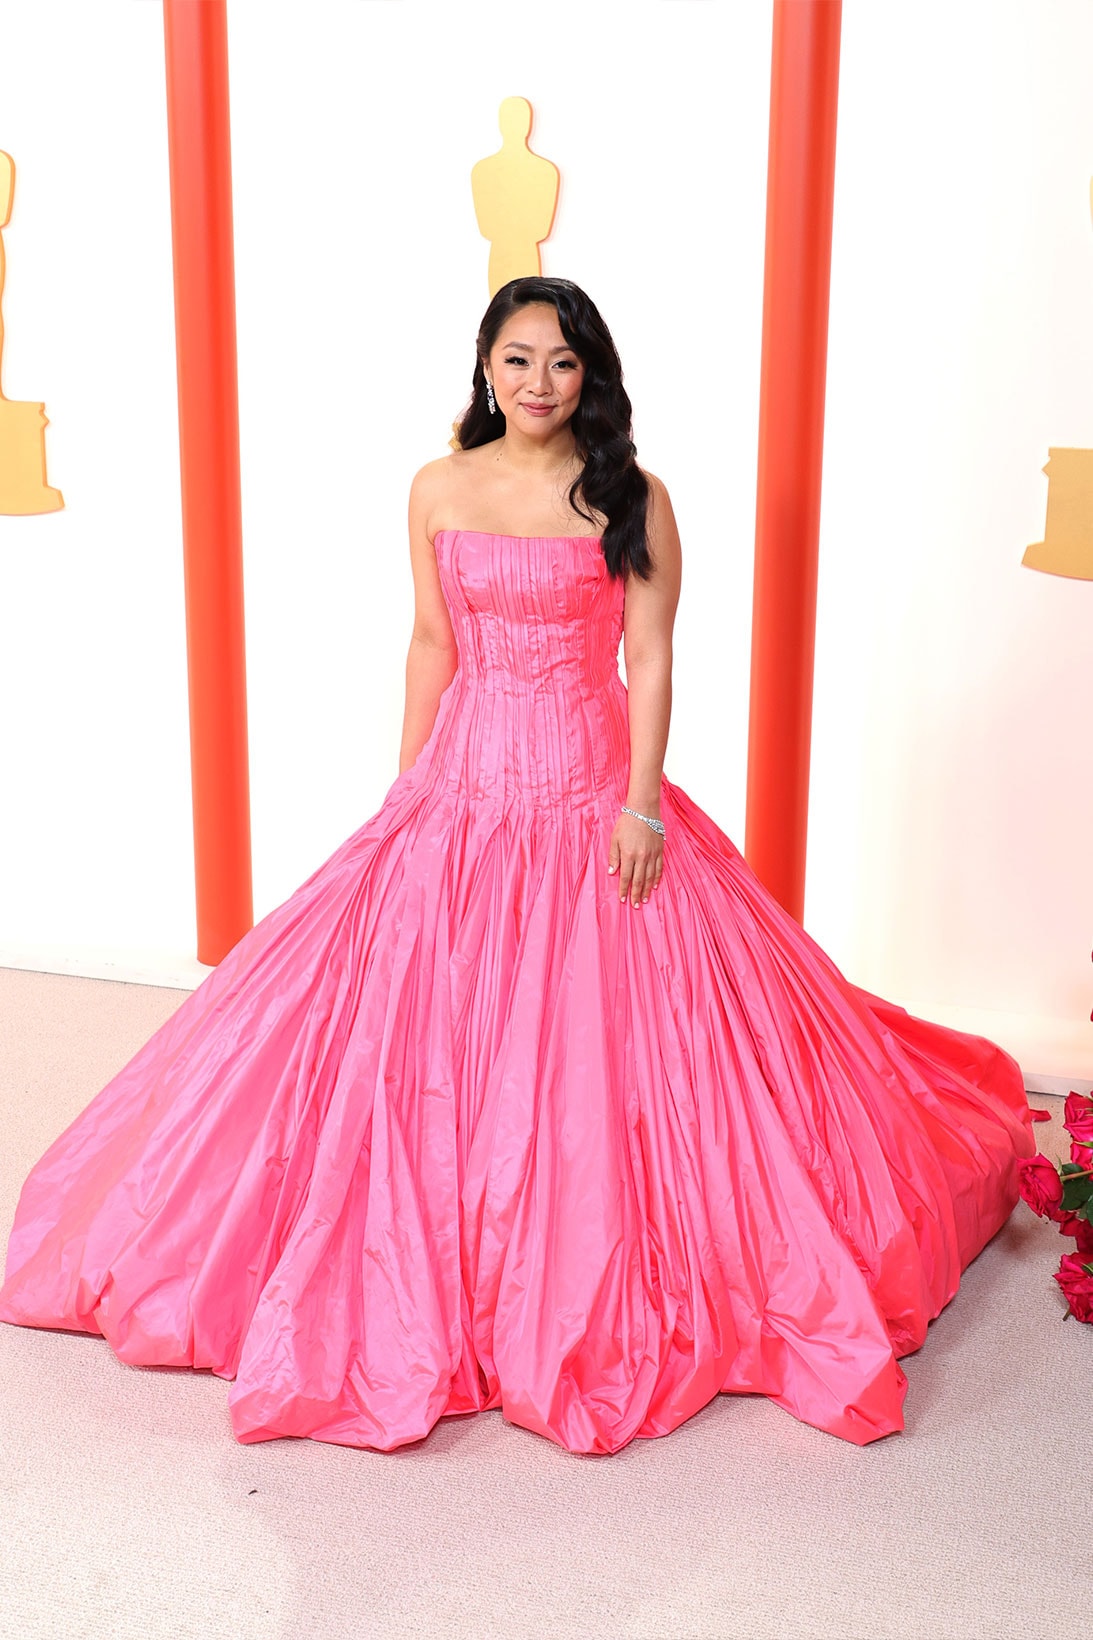 2023 Oscars Academy Awards Best Dressed Red Carpet Stephanie Hsu